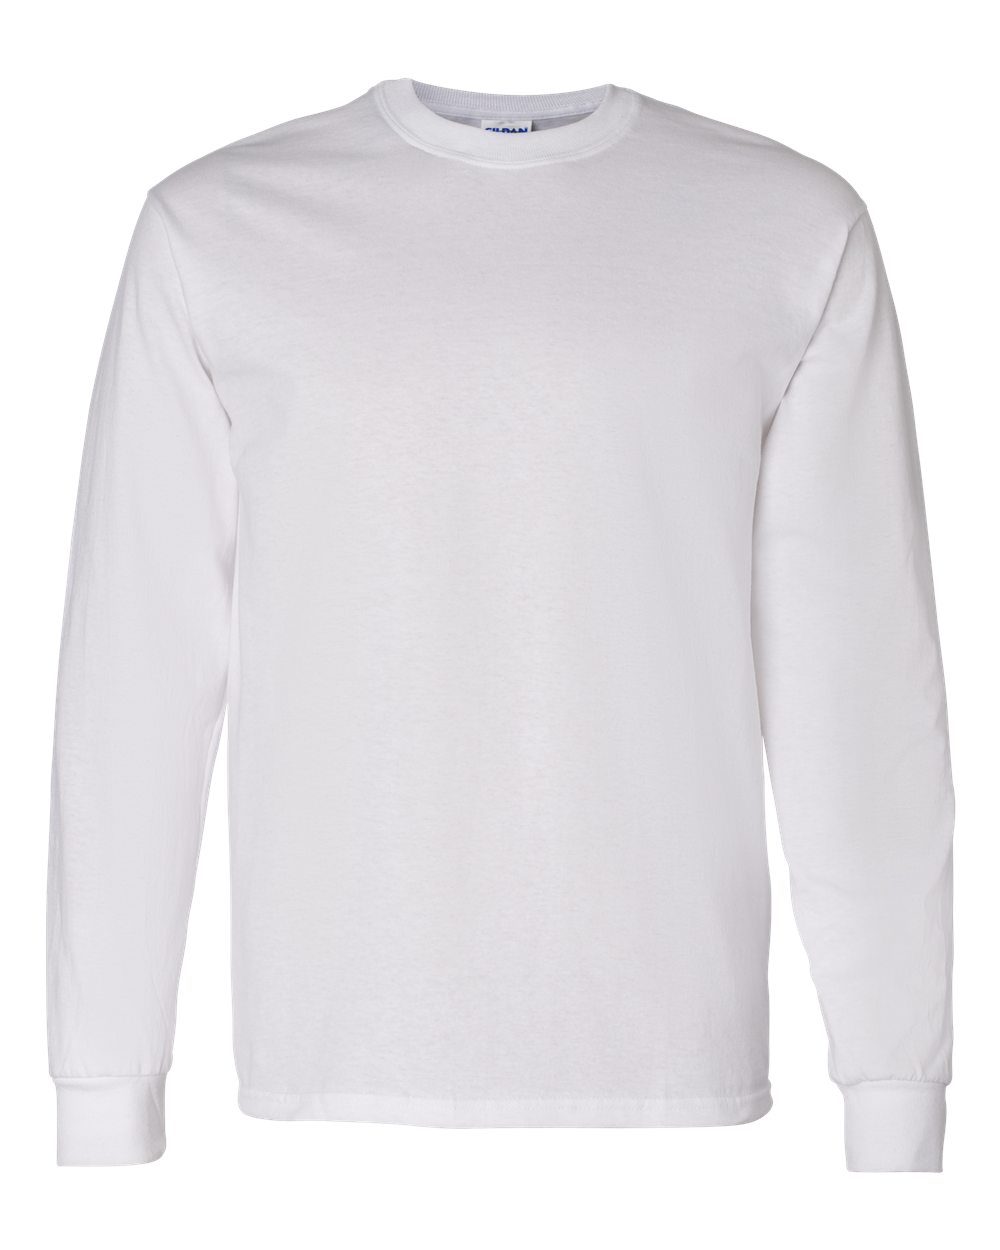 Pretreated Gildan 5400 Heavy Cotton Long Sleeve T-Shirt - White